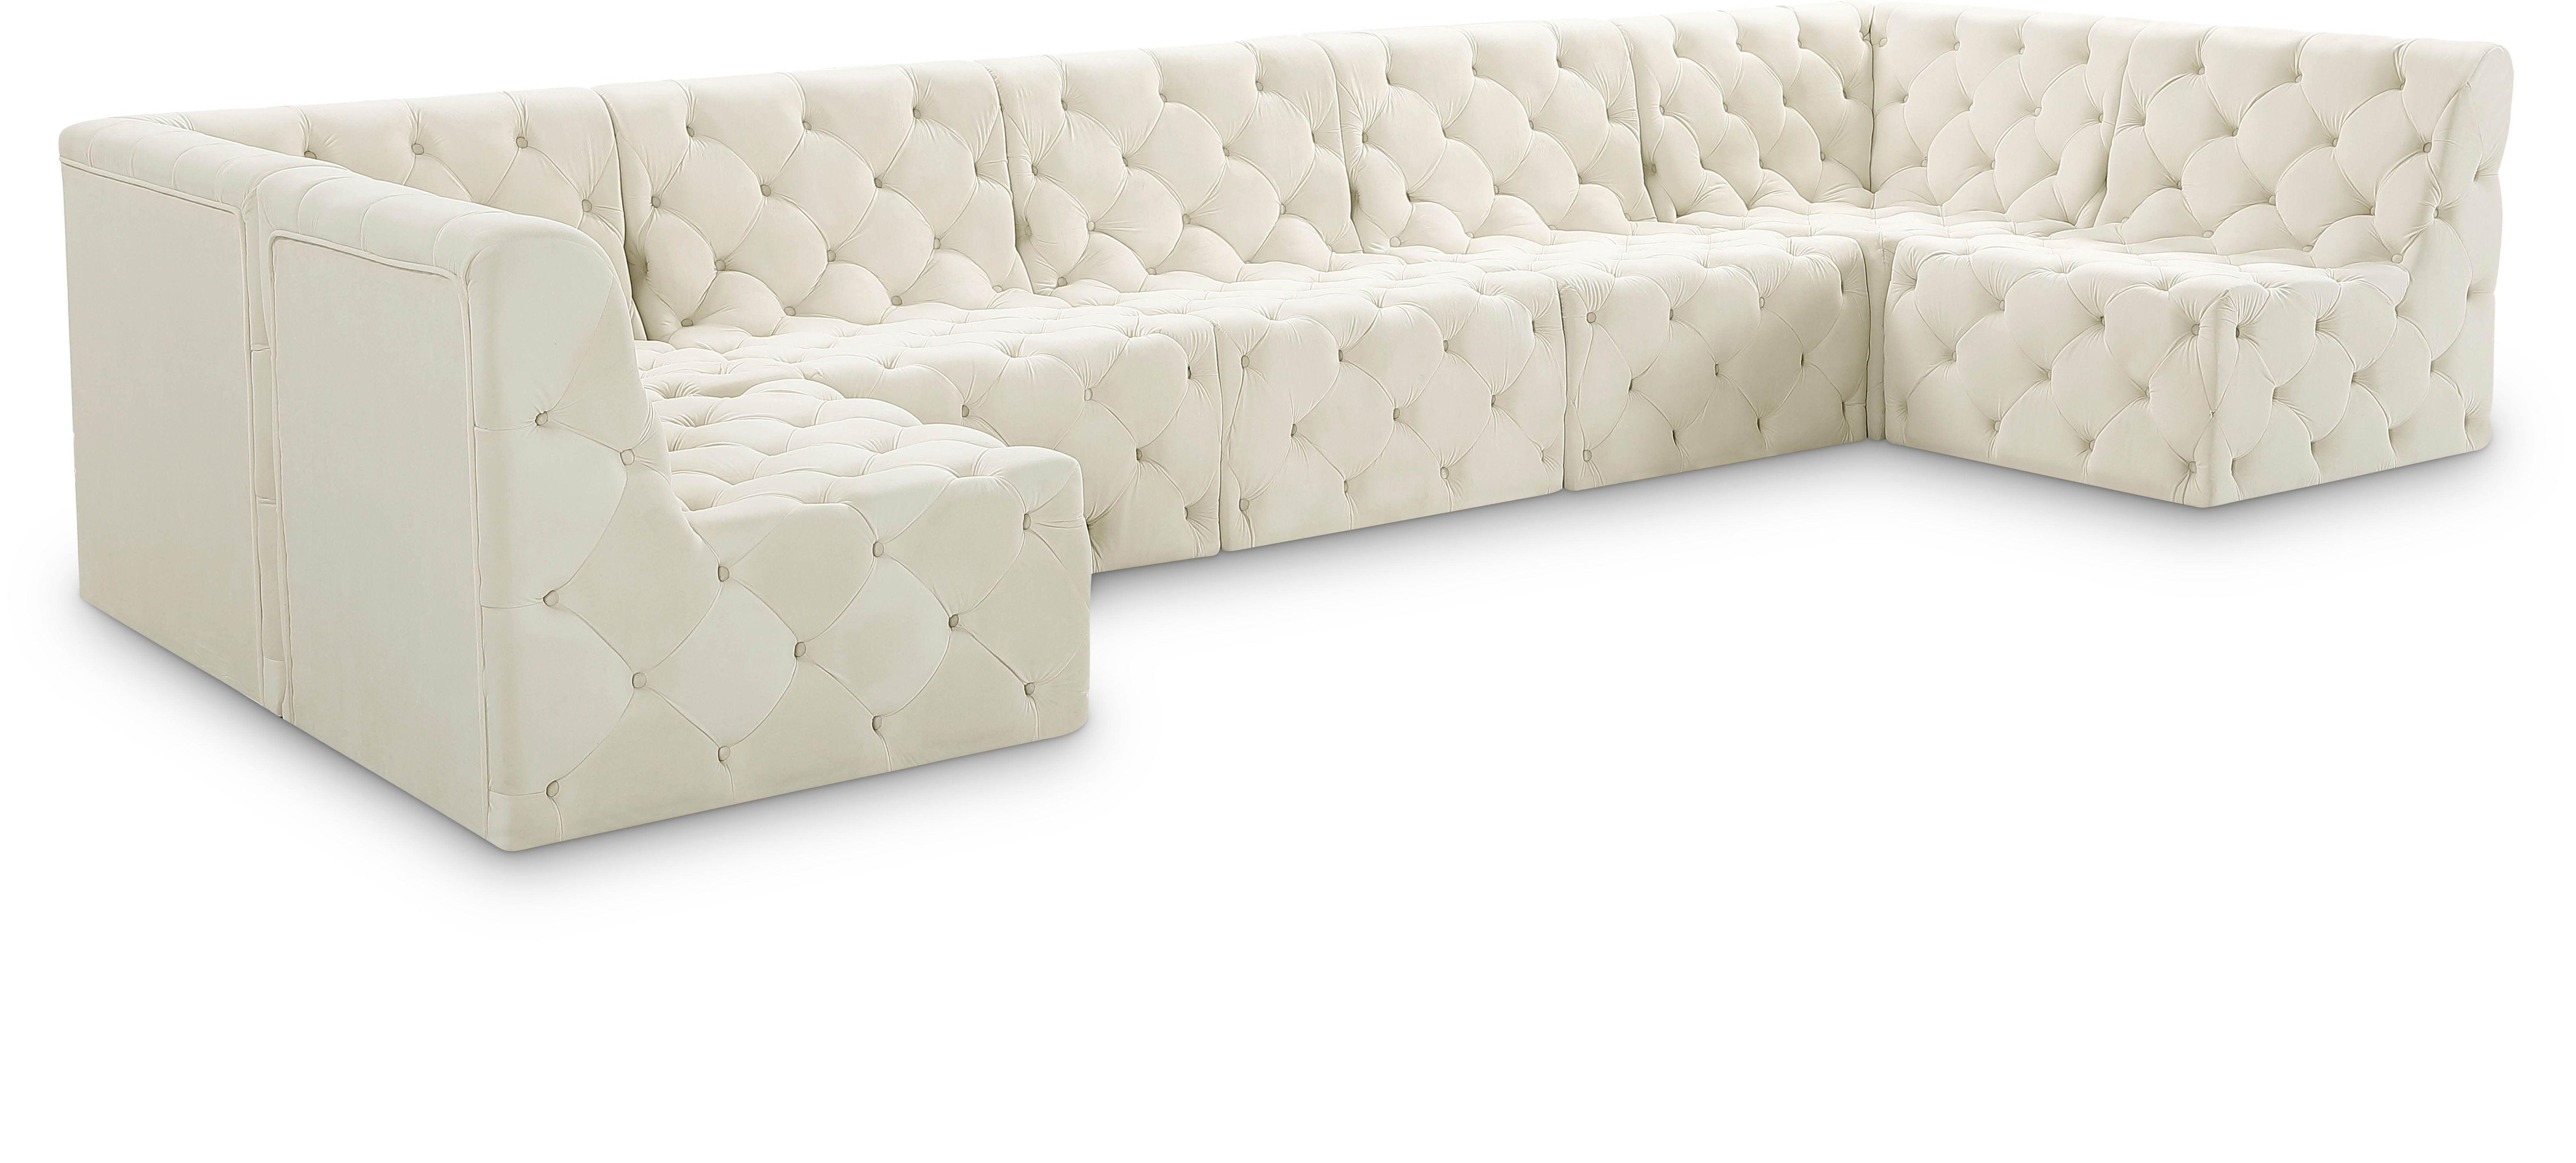 Meridian Furniture - Tuft - Modular Sectional 7 Piece - Cream - Fabric - 5th Avenue Furniture